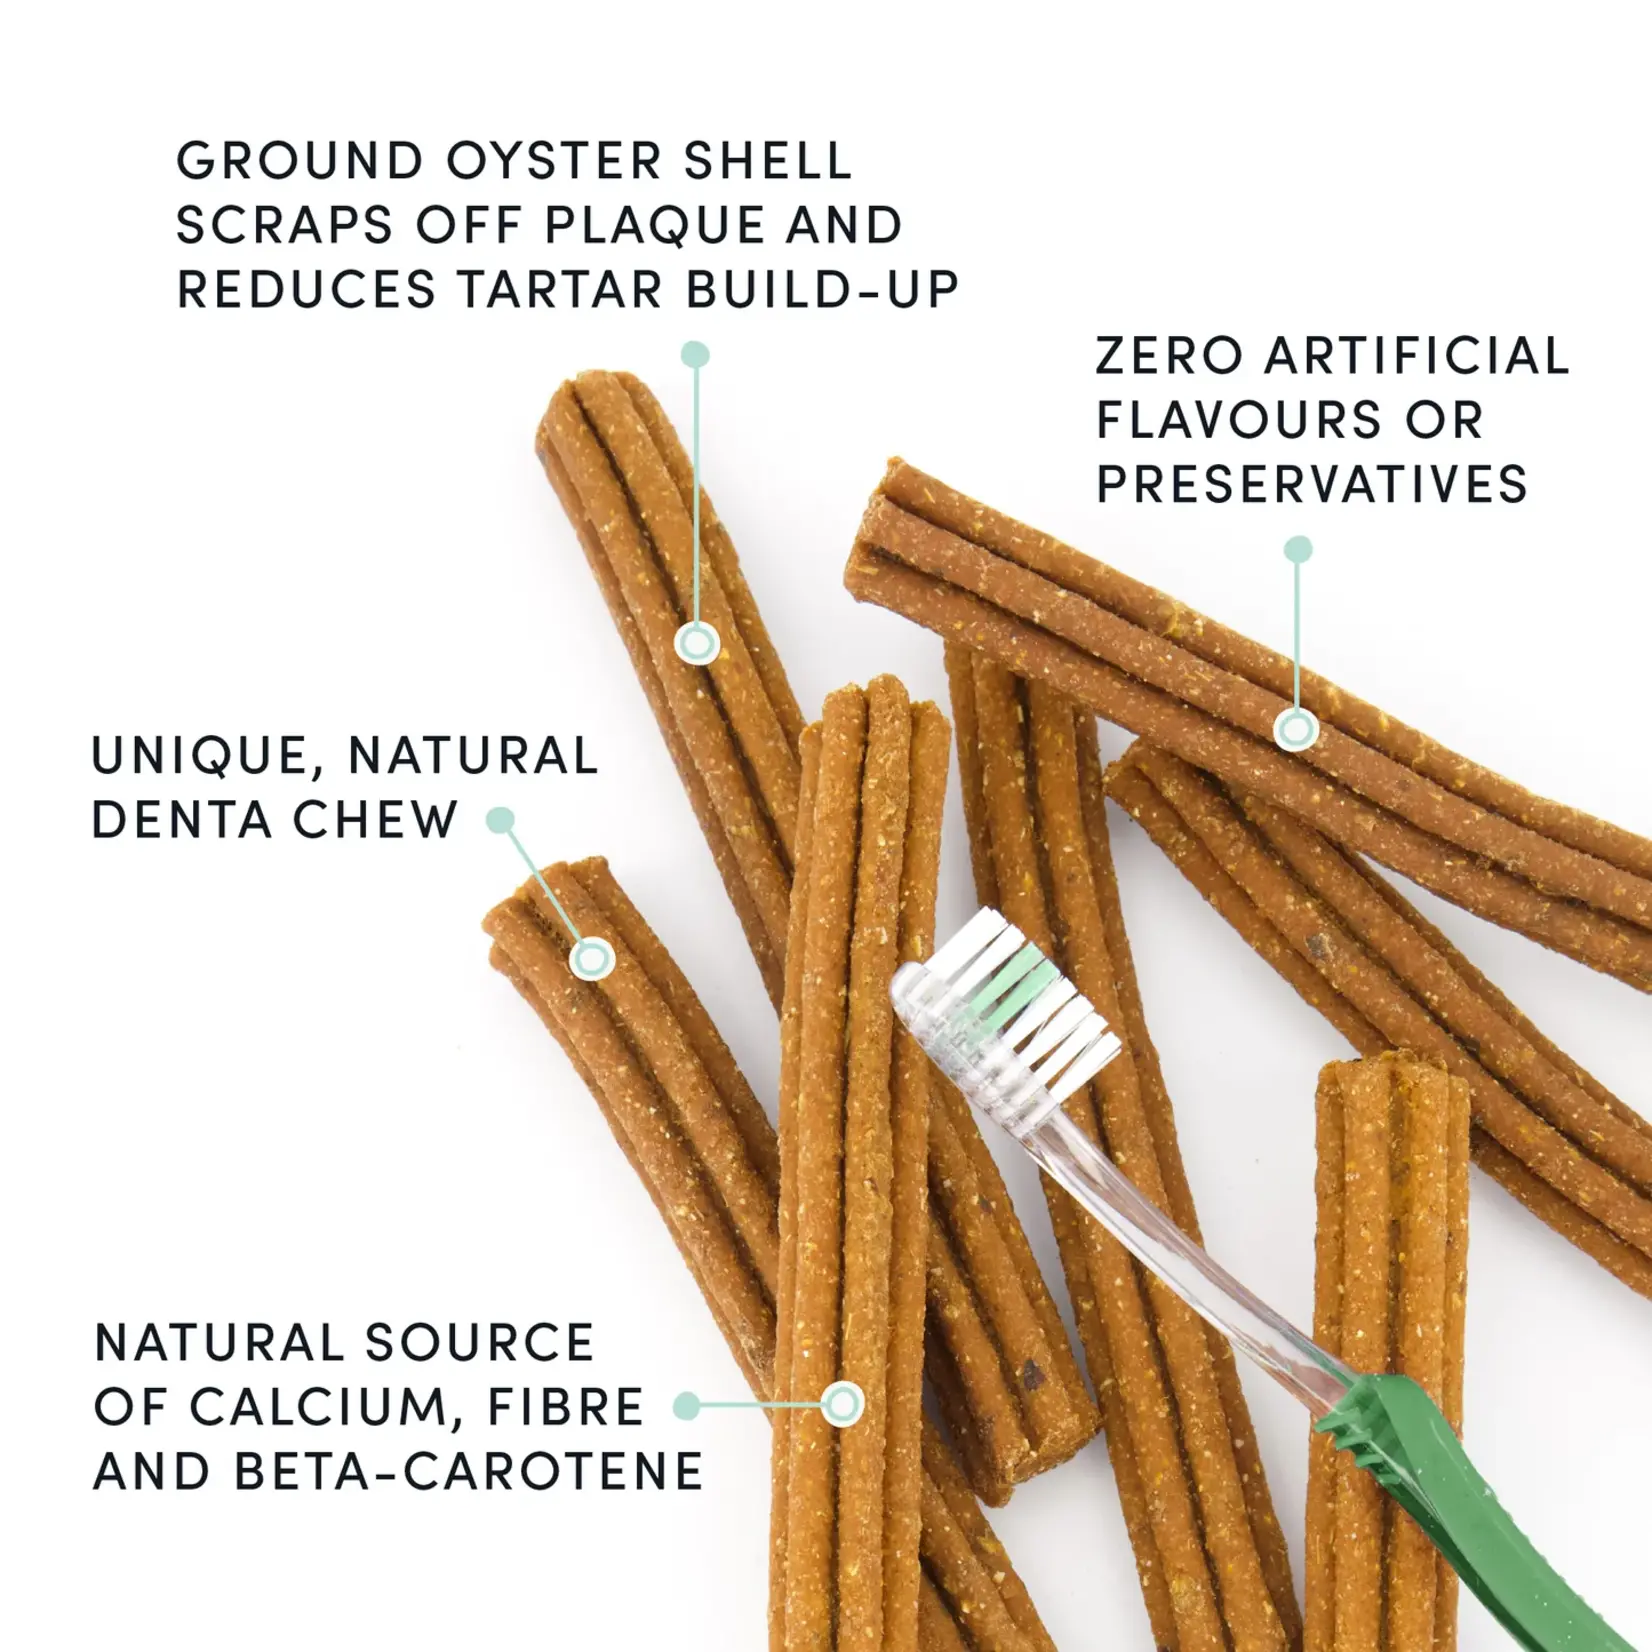 Crumps' Naturals Crumps': Plaque Busters: Bacon Dental Sticks 10pc